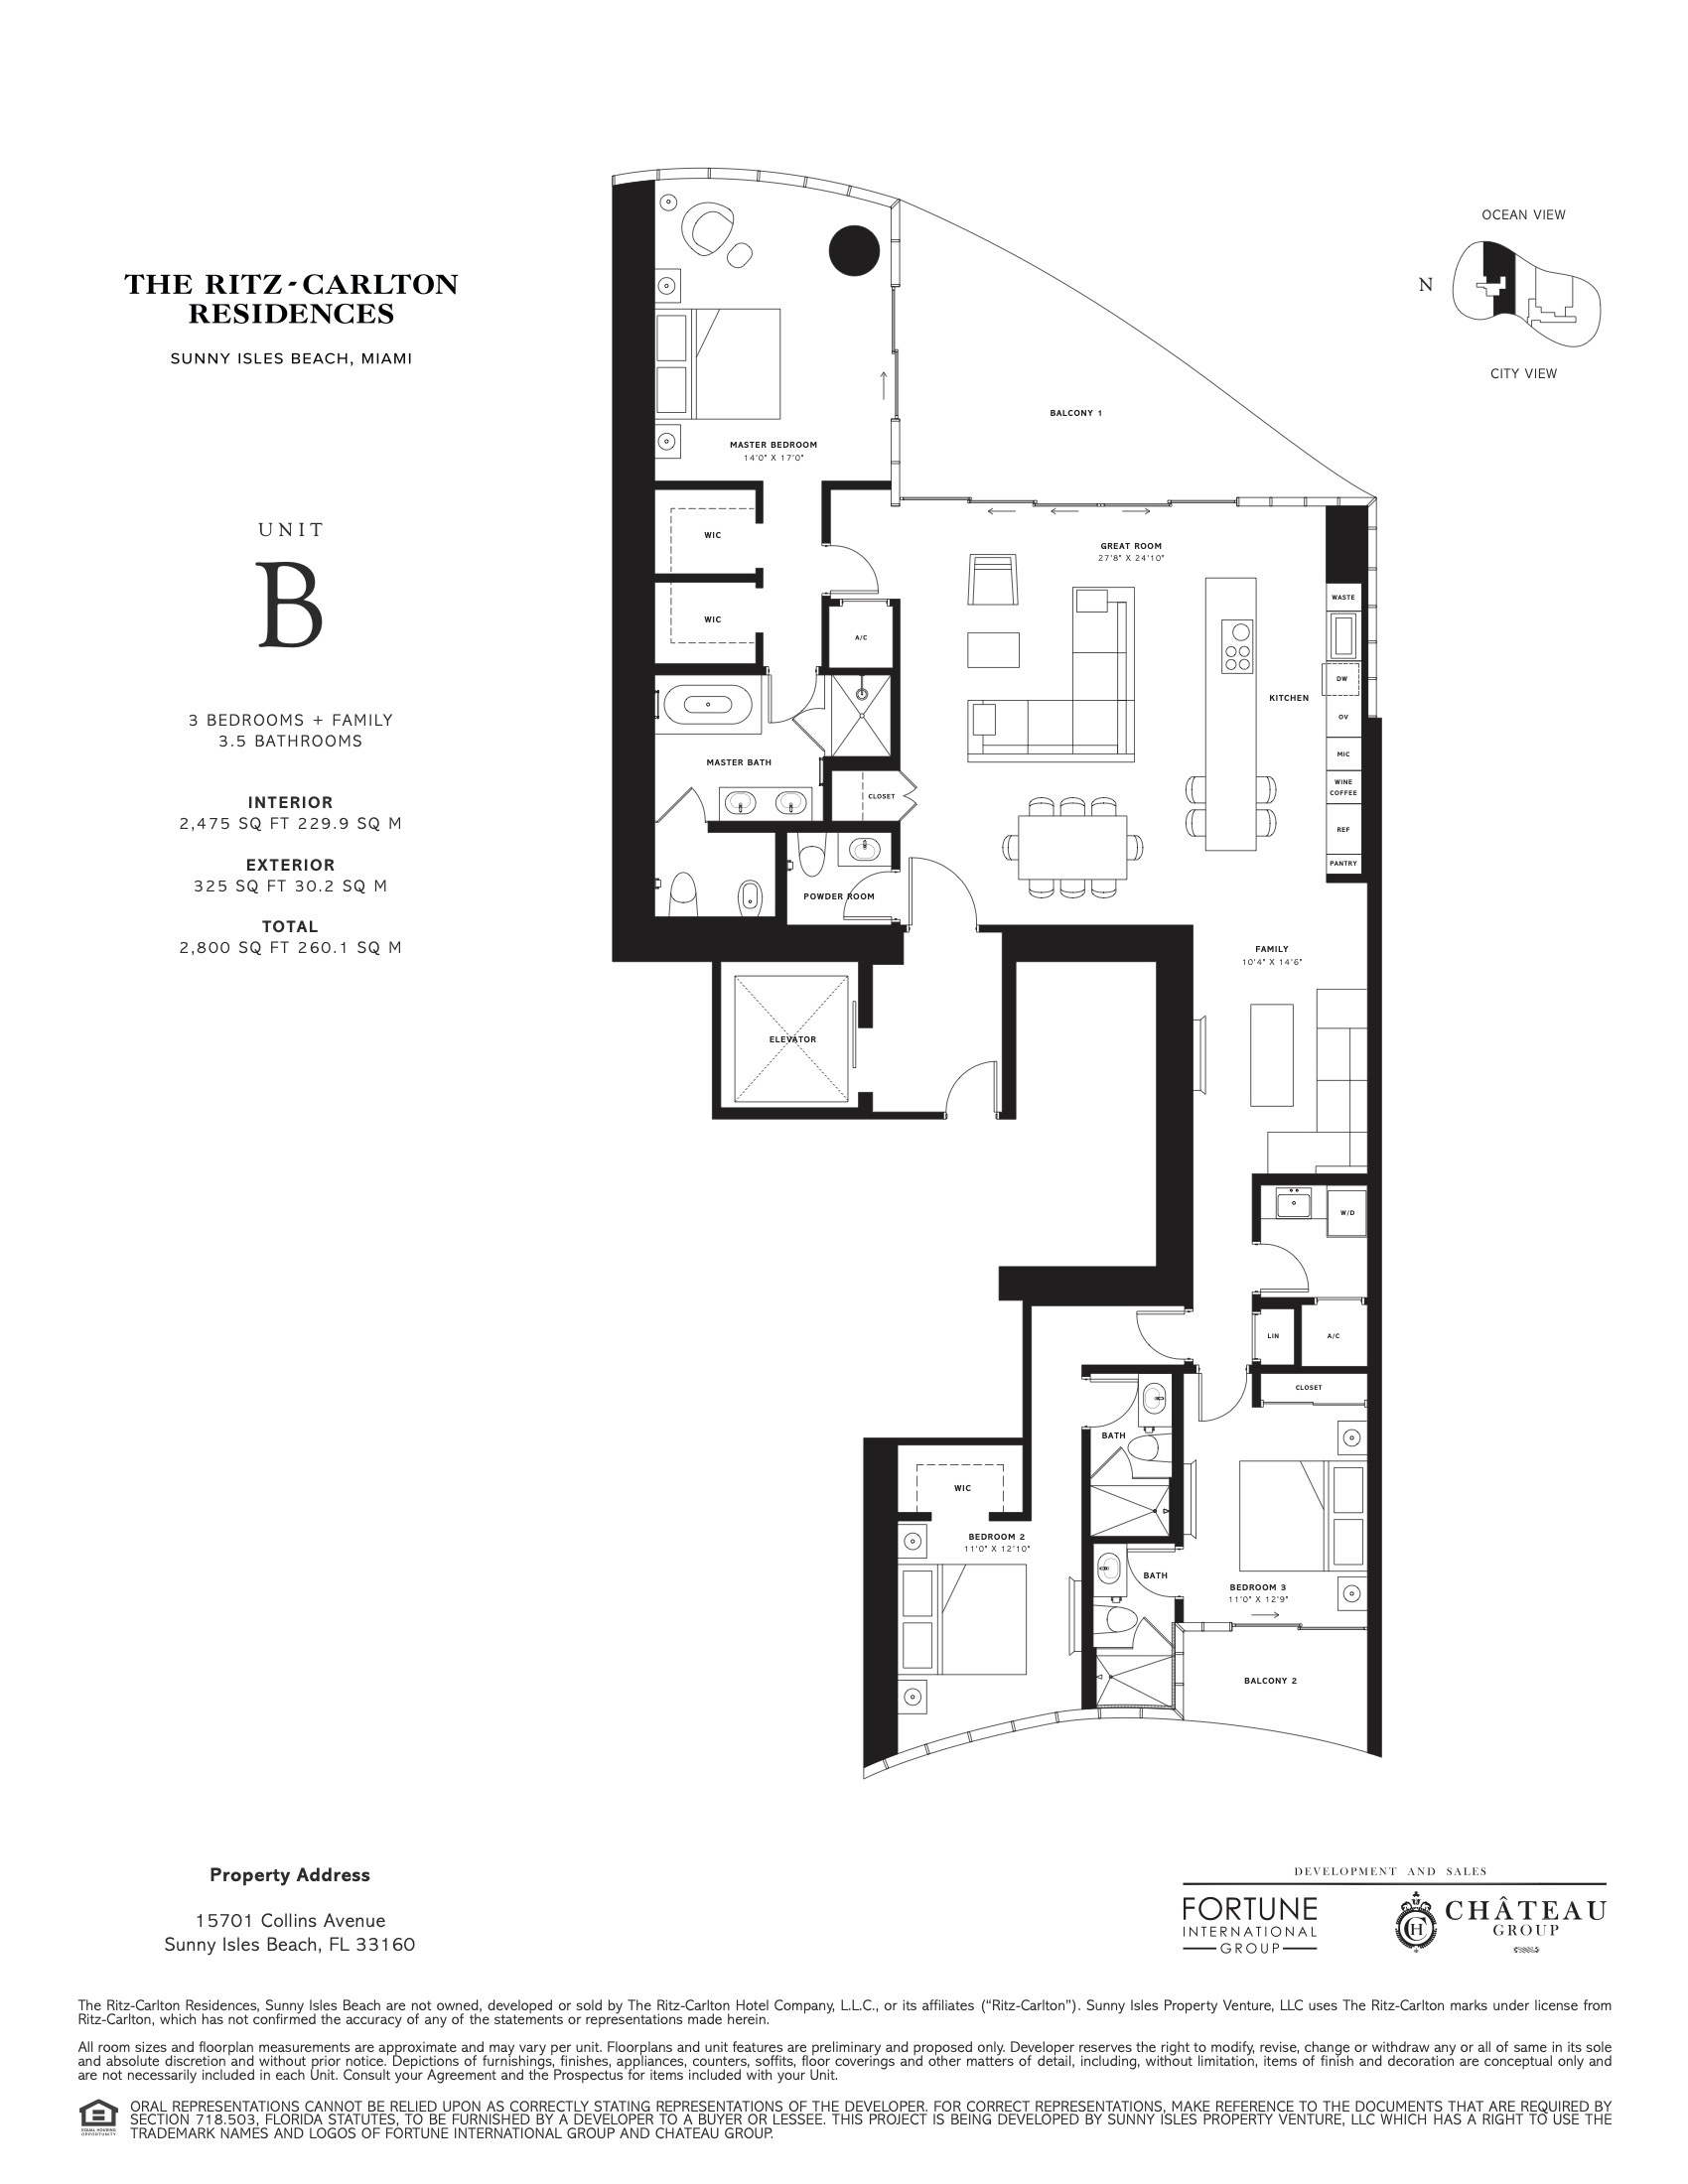 Floor Plan for Ritz-Carlton Sunny Isles Floorplans, Unit B